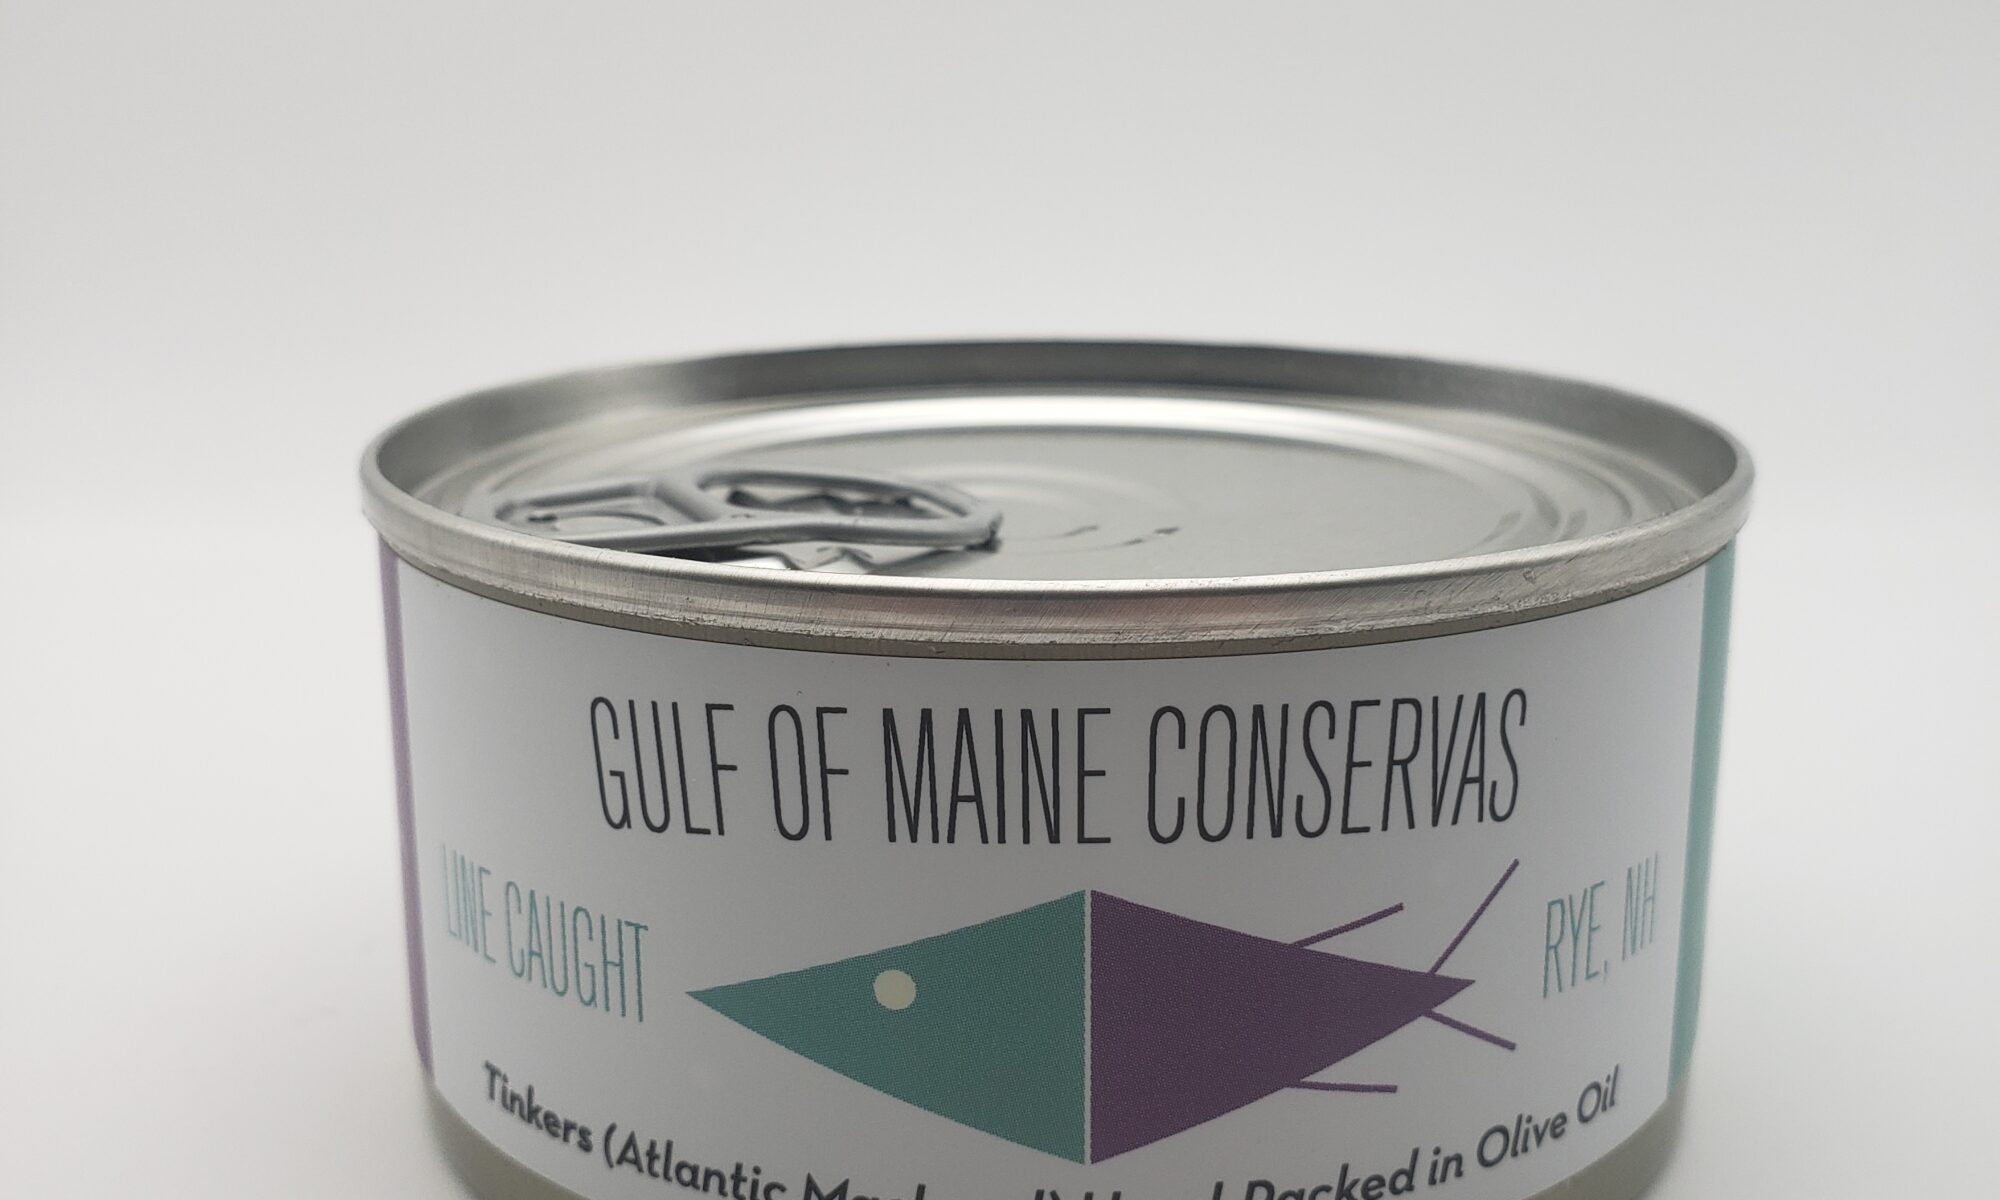 Image of Gulf of Maine tinkers (atlantic mackerel)